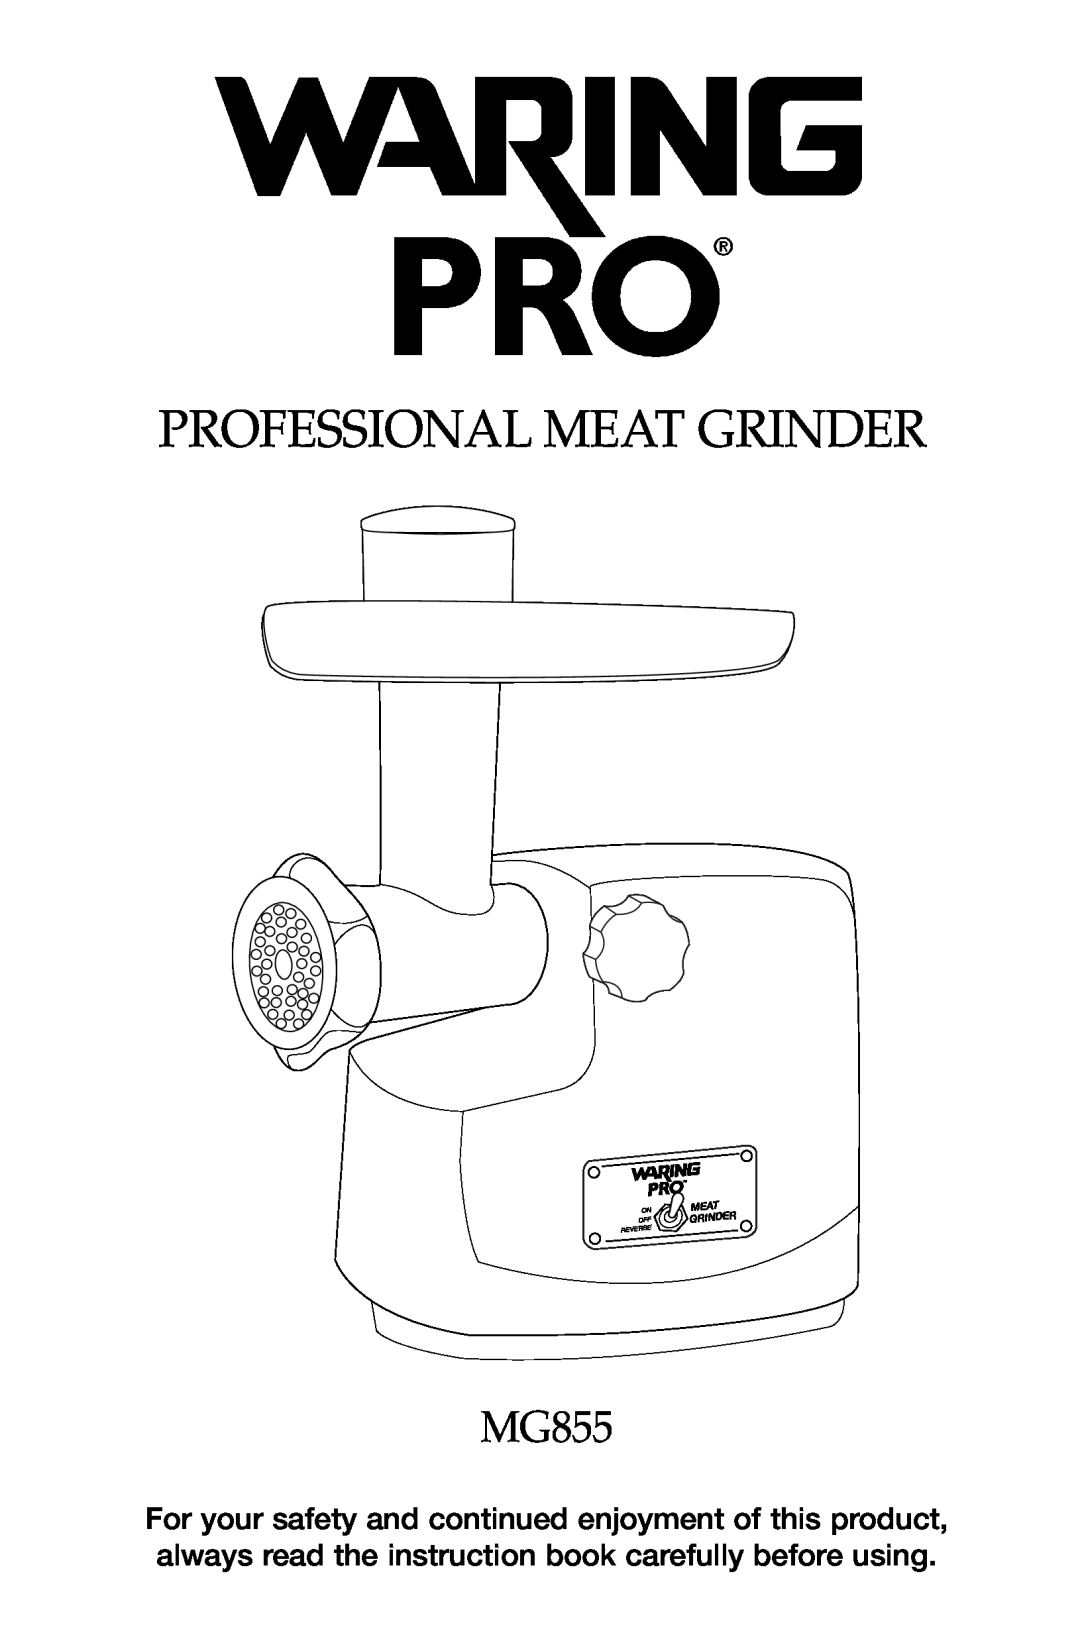 Waring MG855 manual Professional MEAT GRINDER, mg855, Meat Grinder 